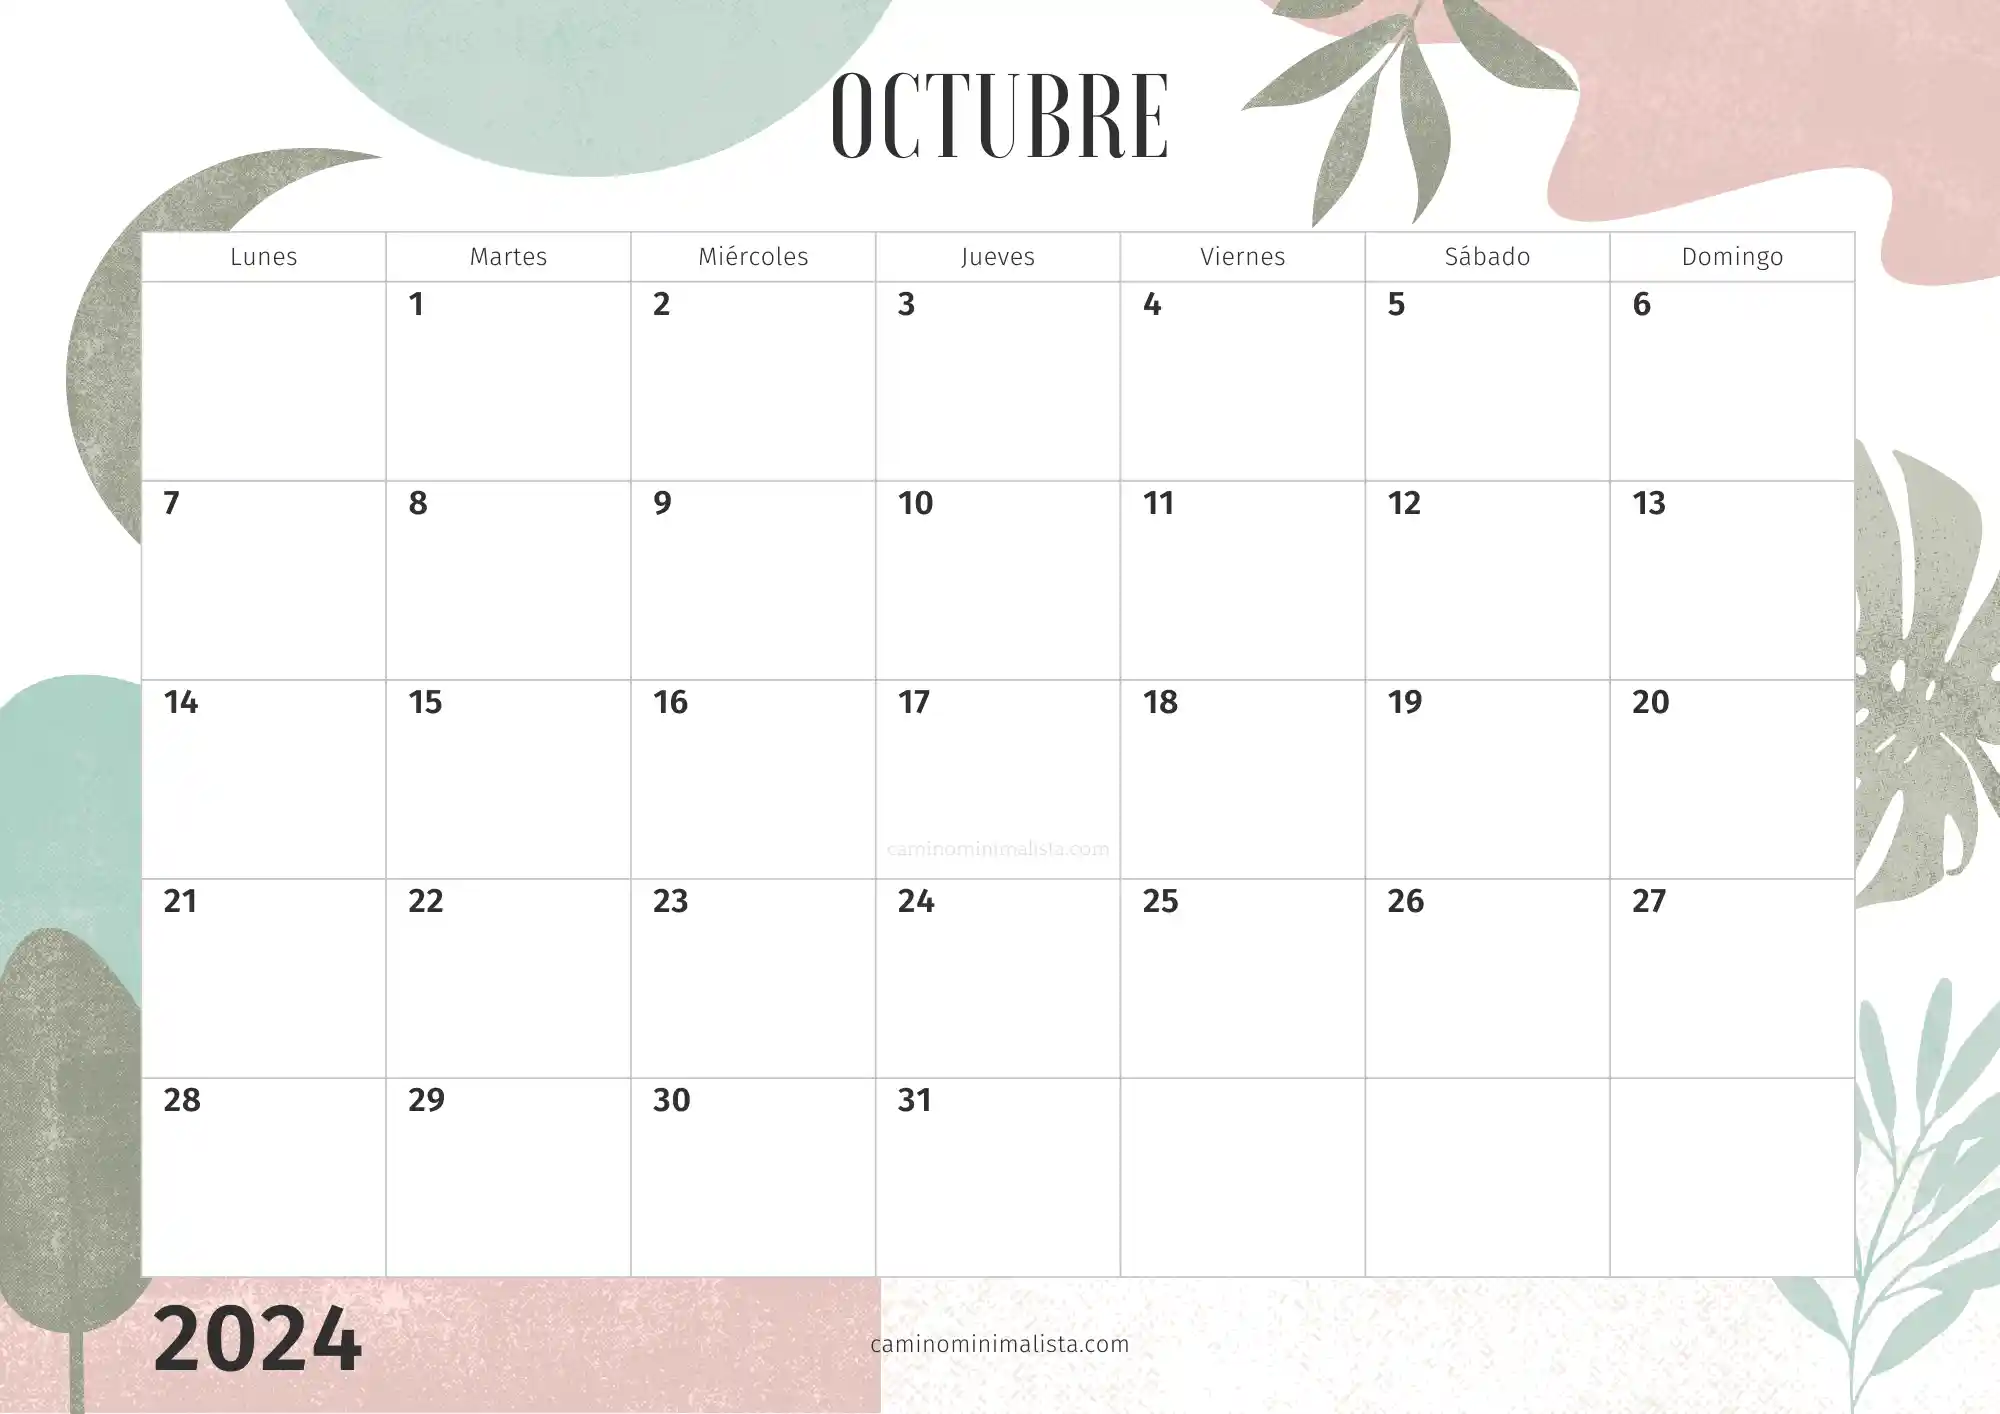 Calendario Octubre 2024 decorado bonito